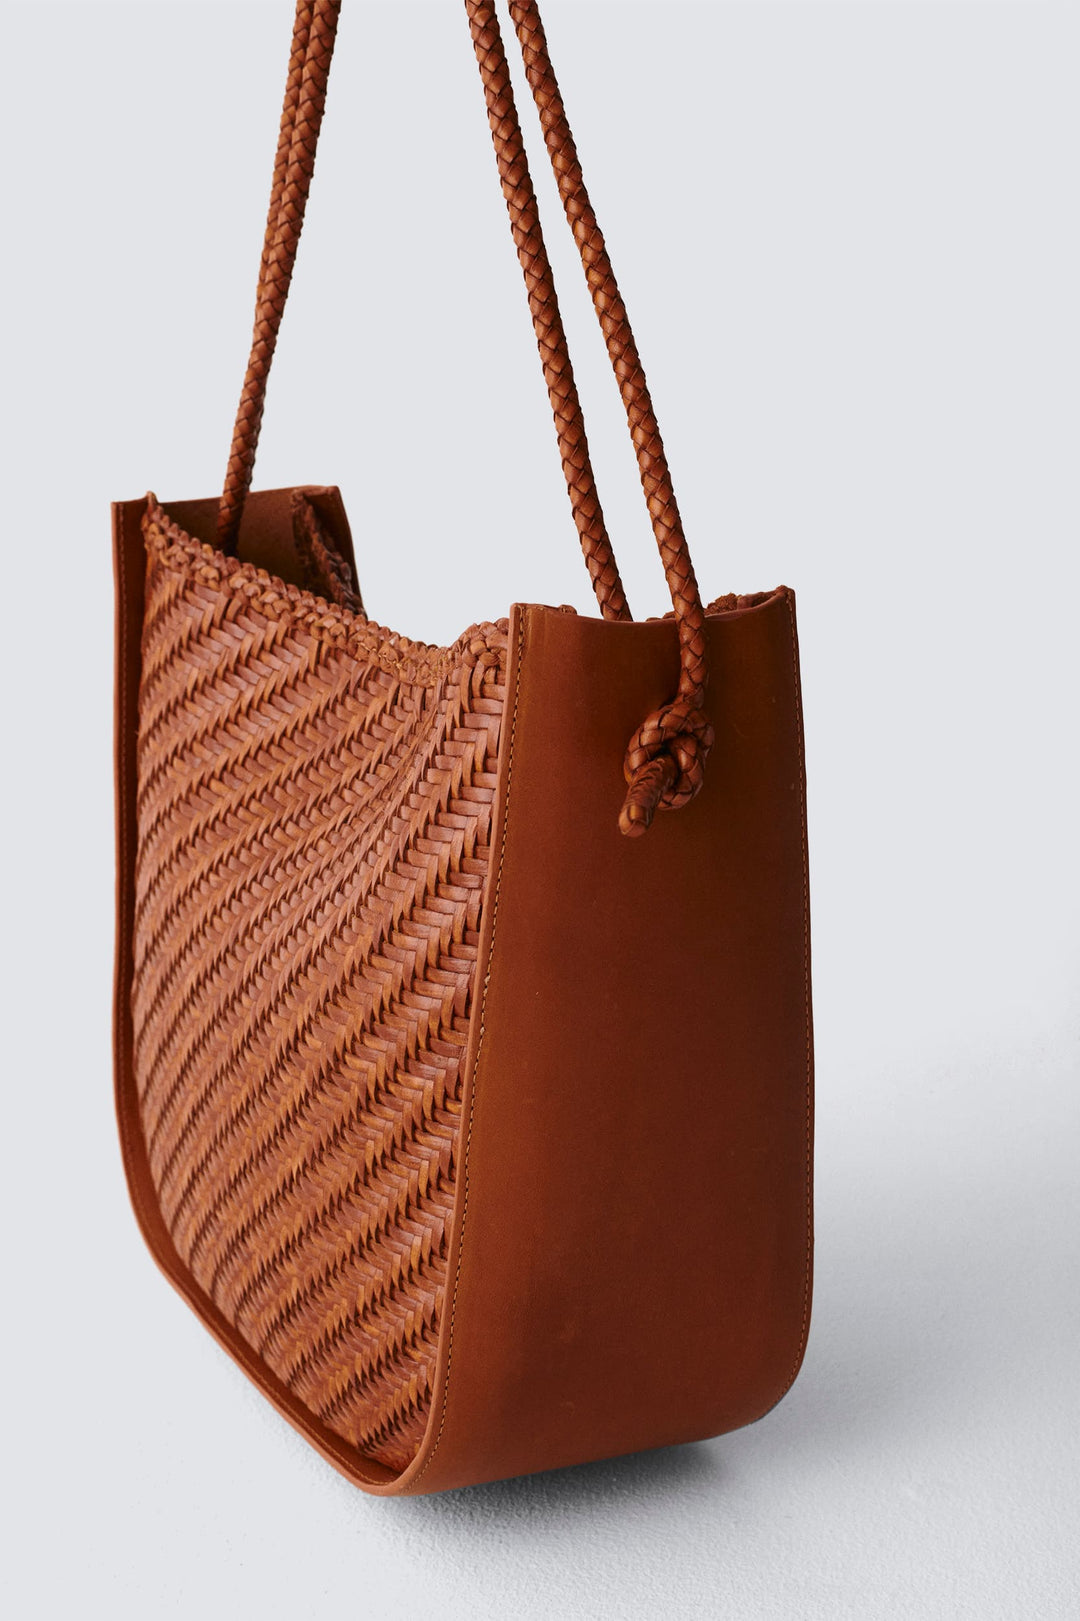 Dragon Diffusion - Japan Tote Tan Woven Leather Bag